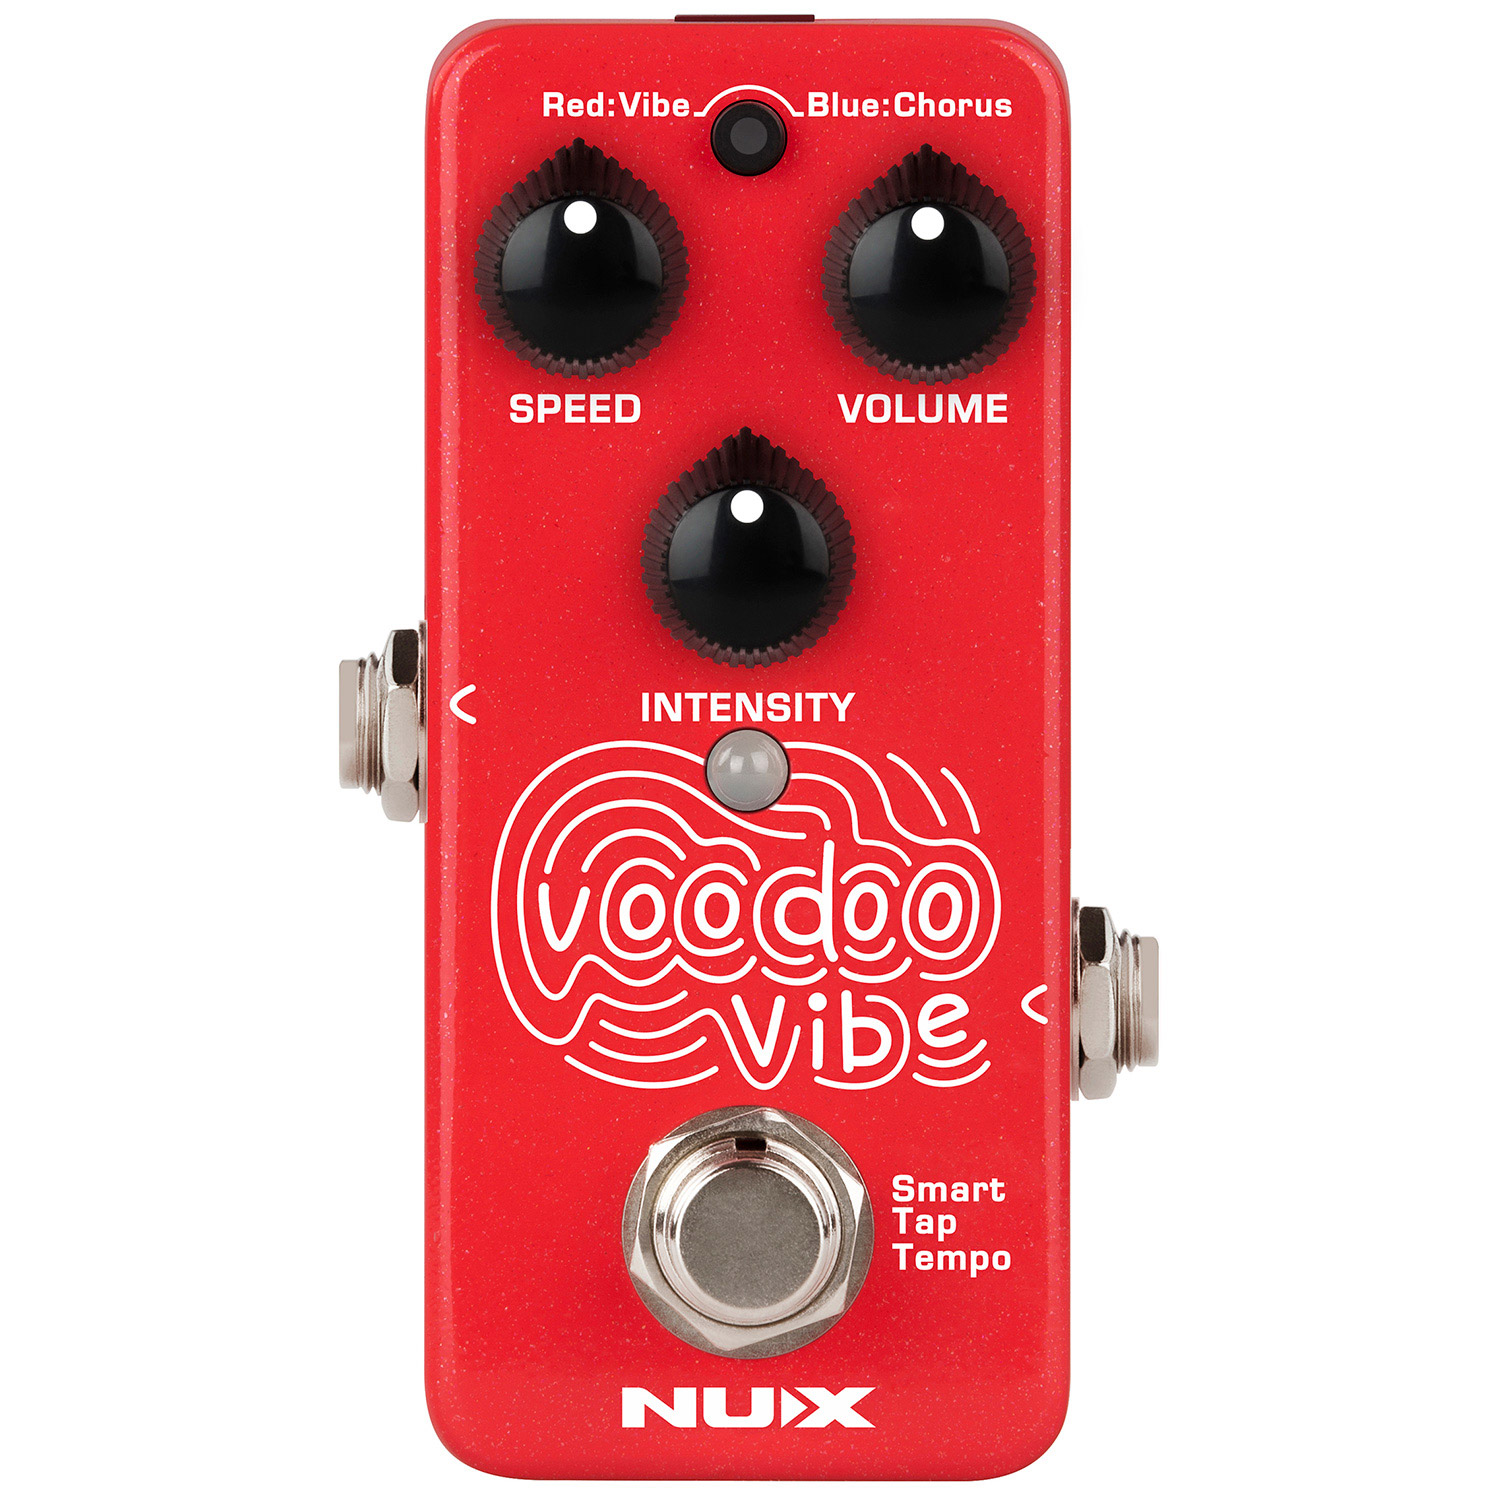 NU-X Voodoo Vibe Mini Guitar Effect Pedal (NEW)